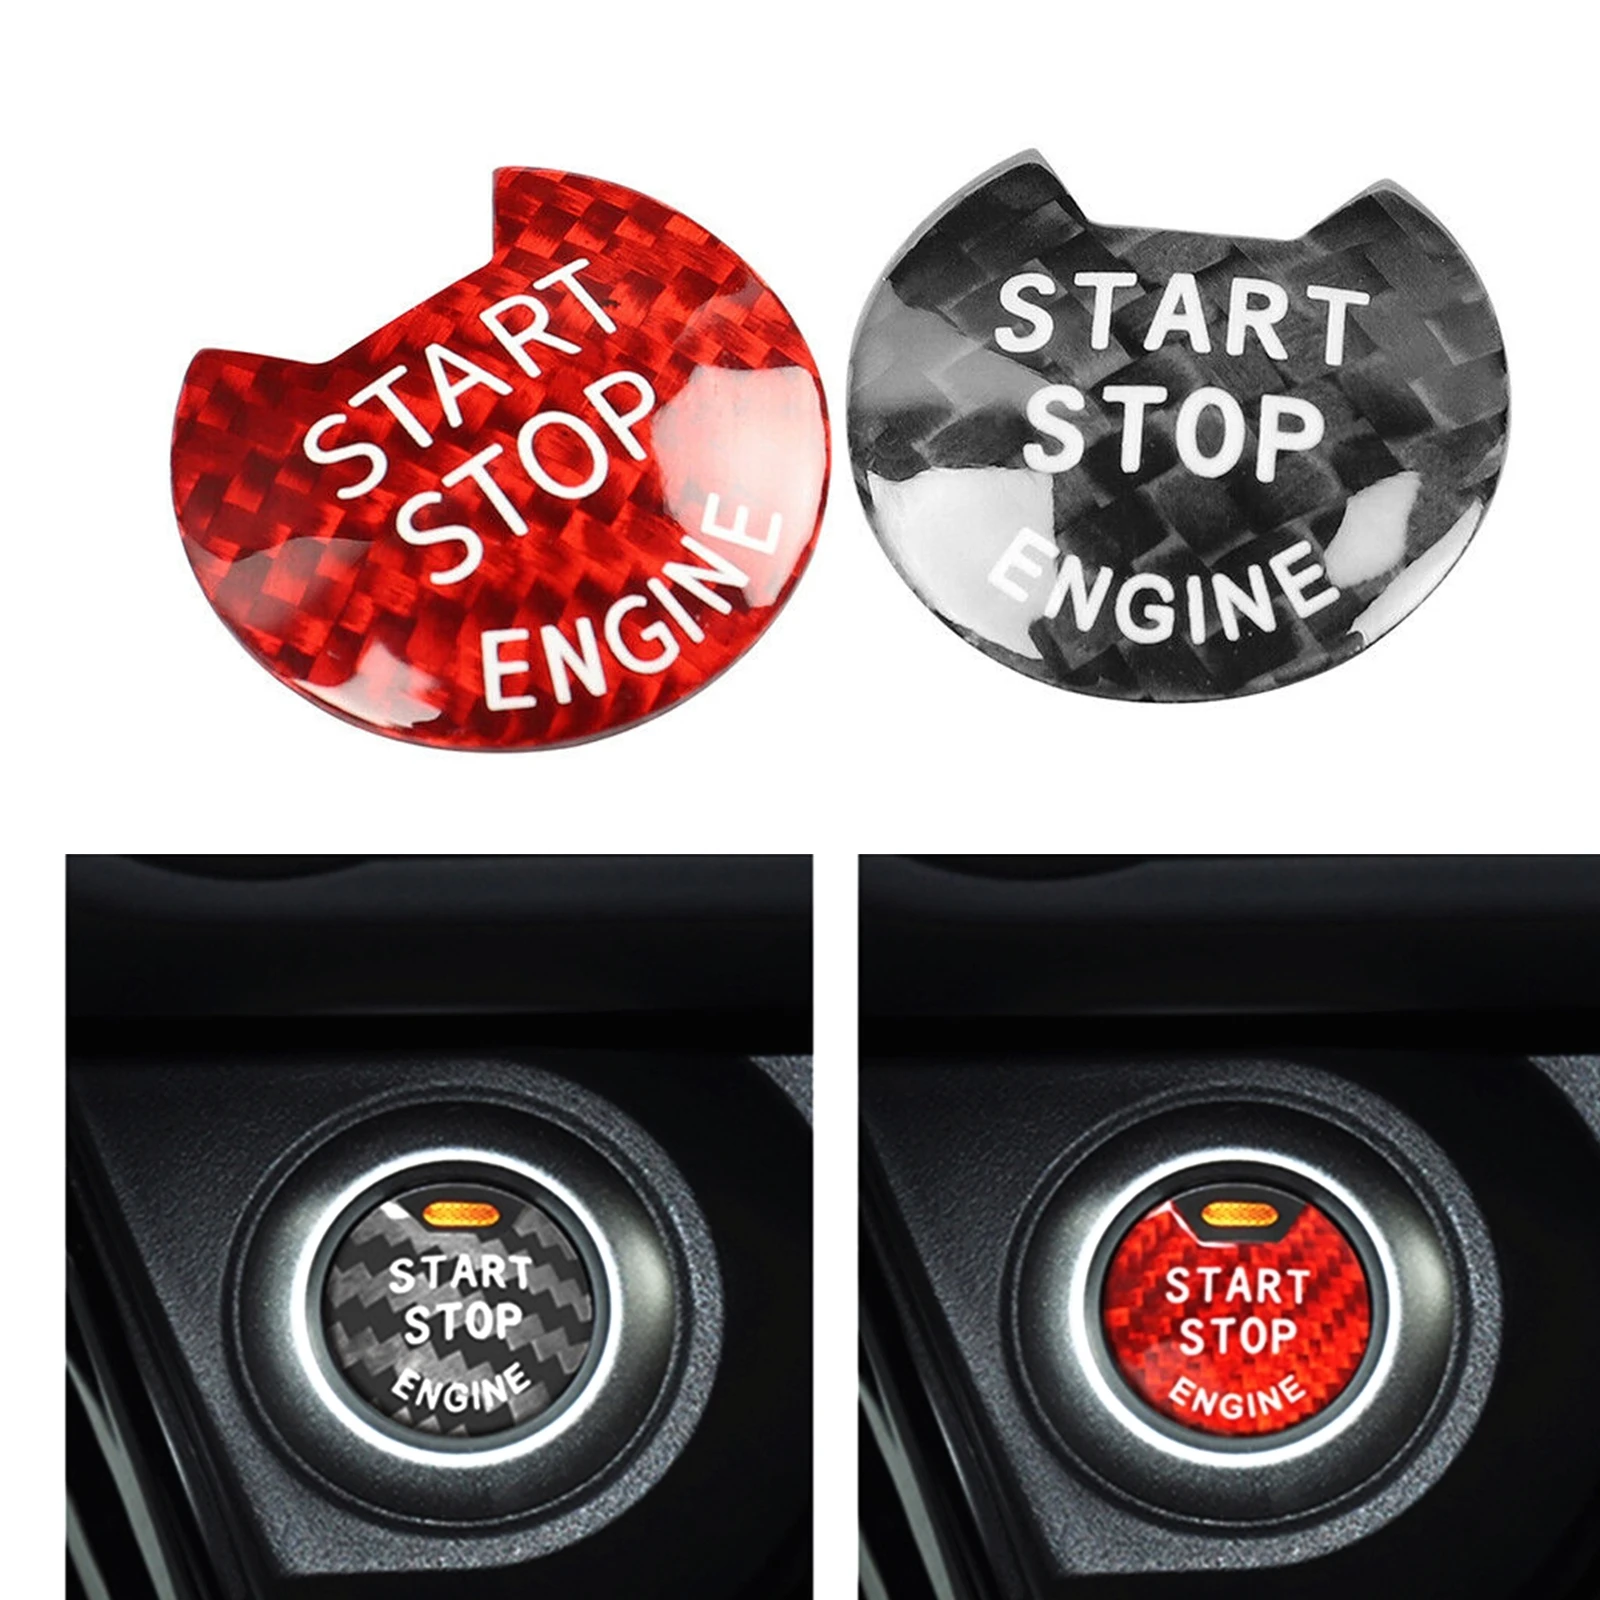 

Engine Start Stop Push Button Switch Cover Key Sticker Strip Decoration Carbon Fiber For Nissan Infiniti Q50 Q60